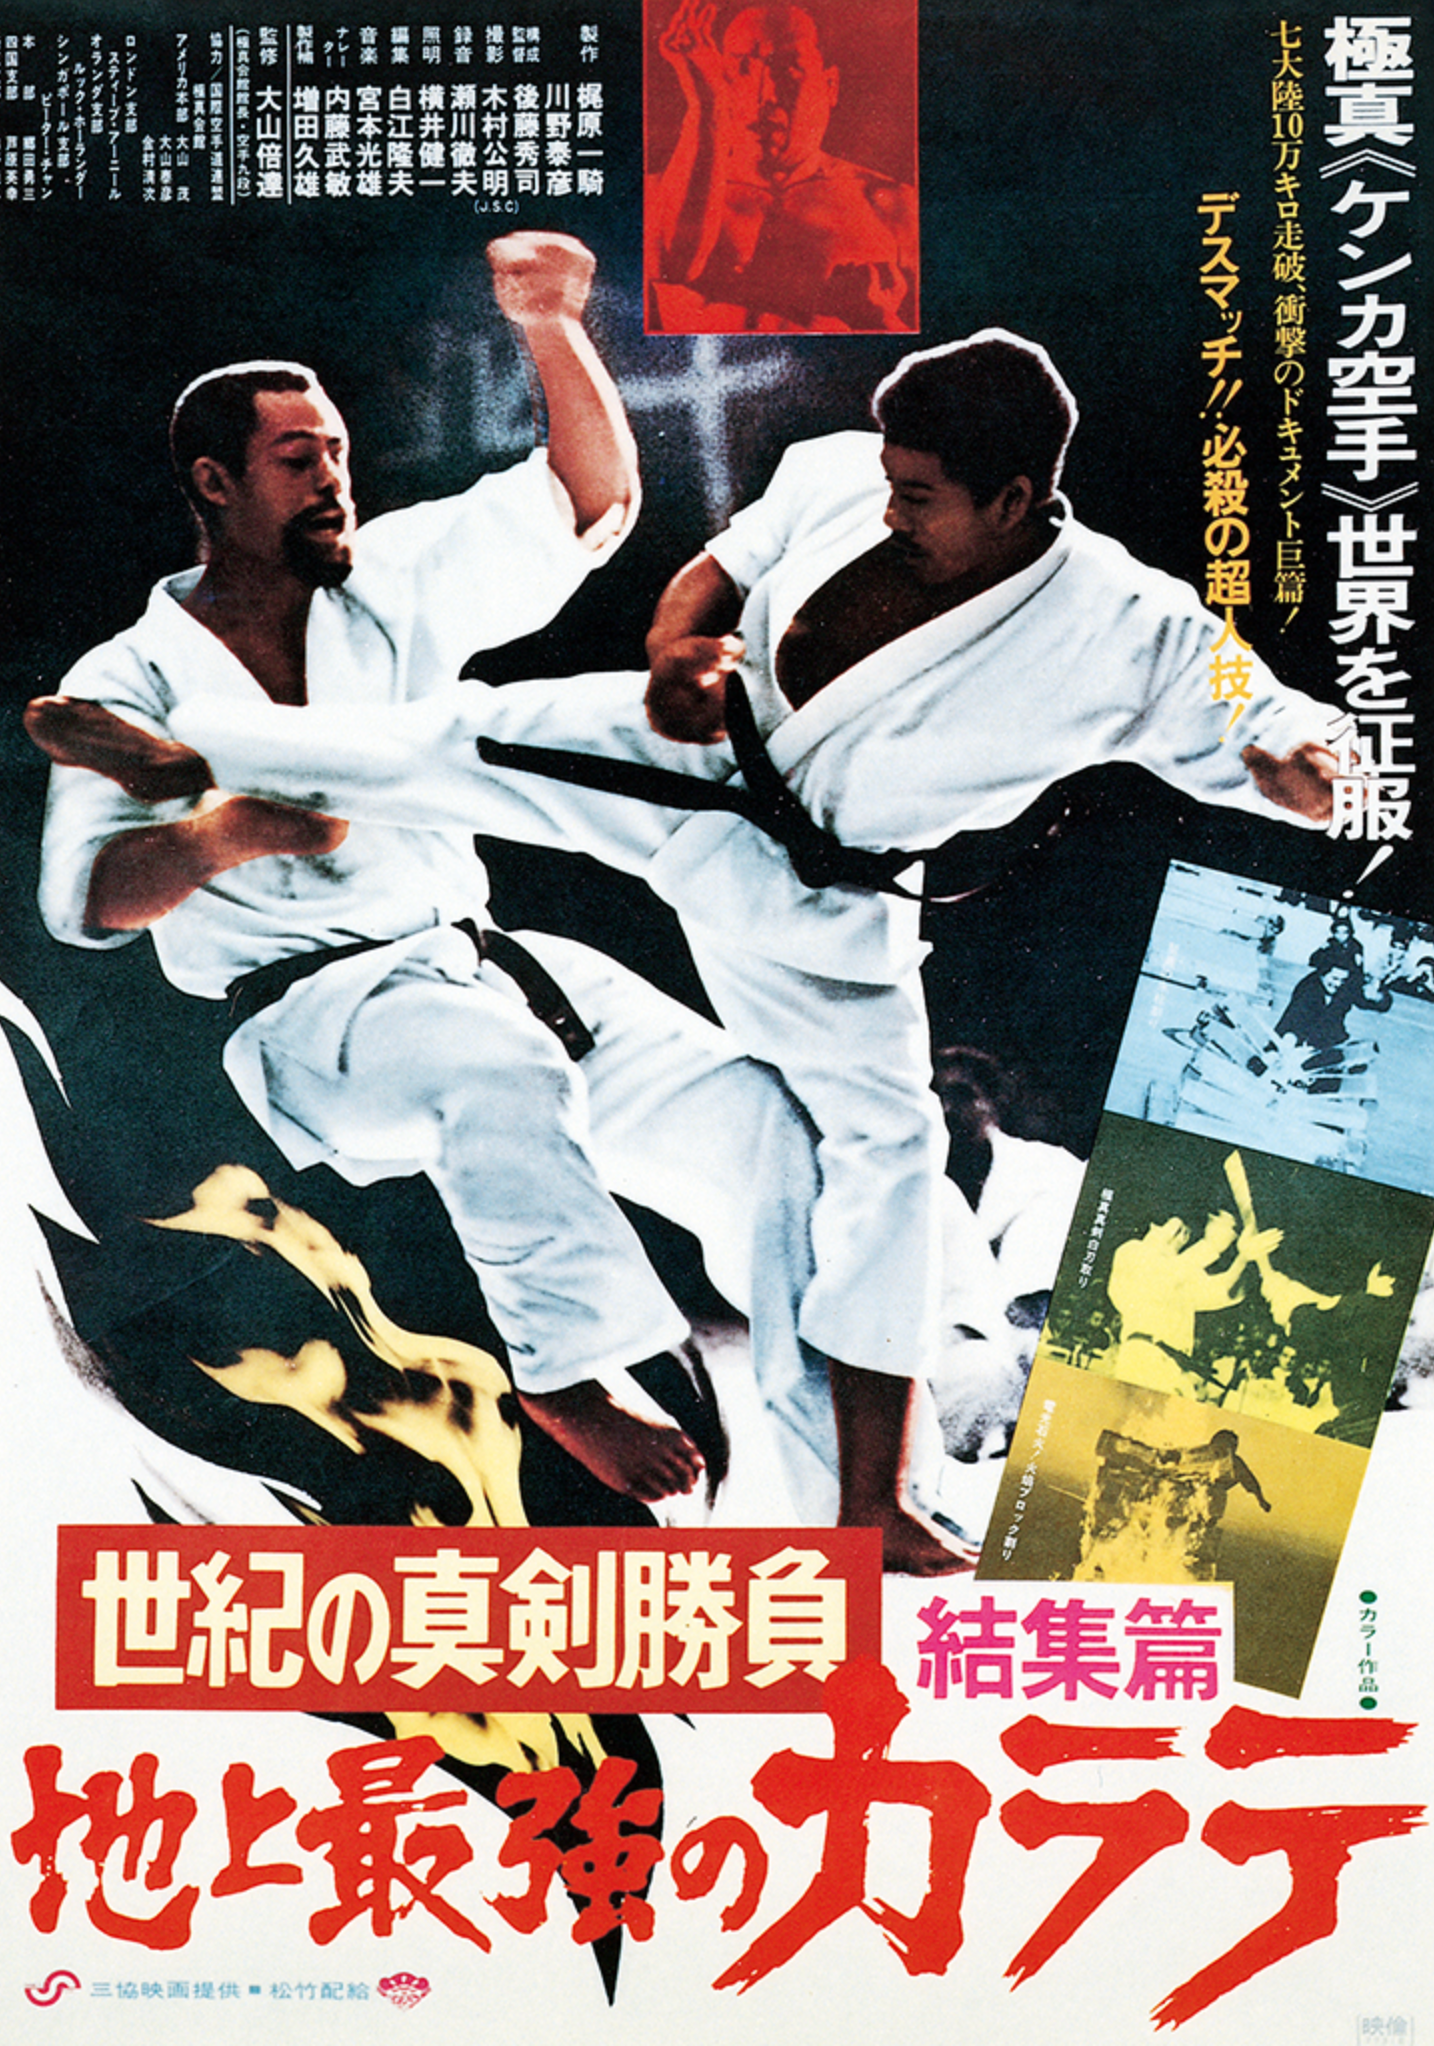 Strongest Karate Kyokushin Documentary DVD Vol 4 (Region 2)